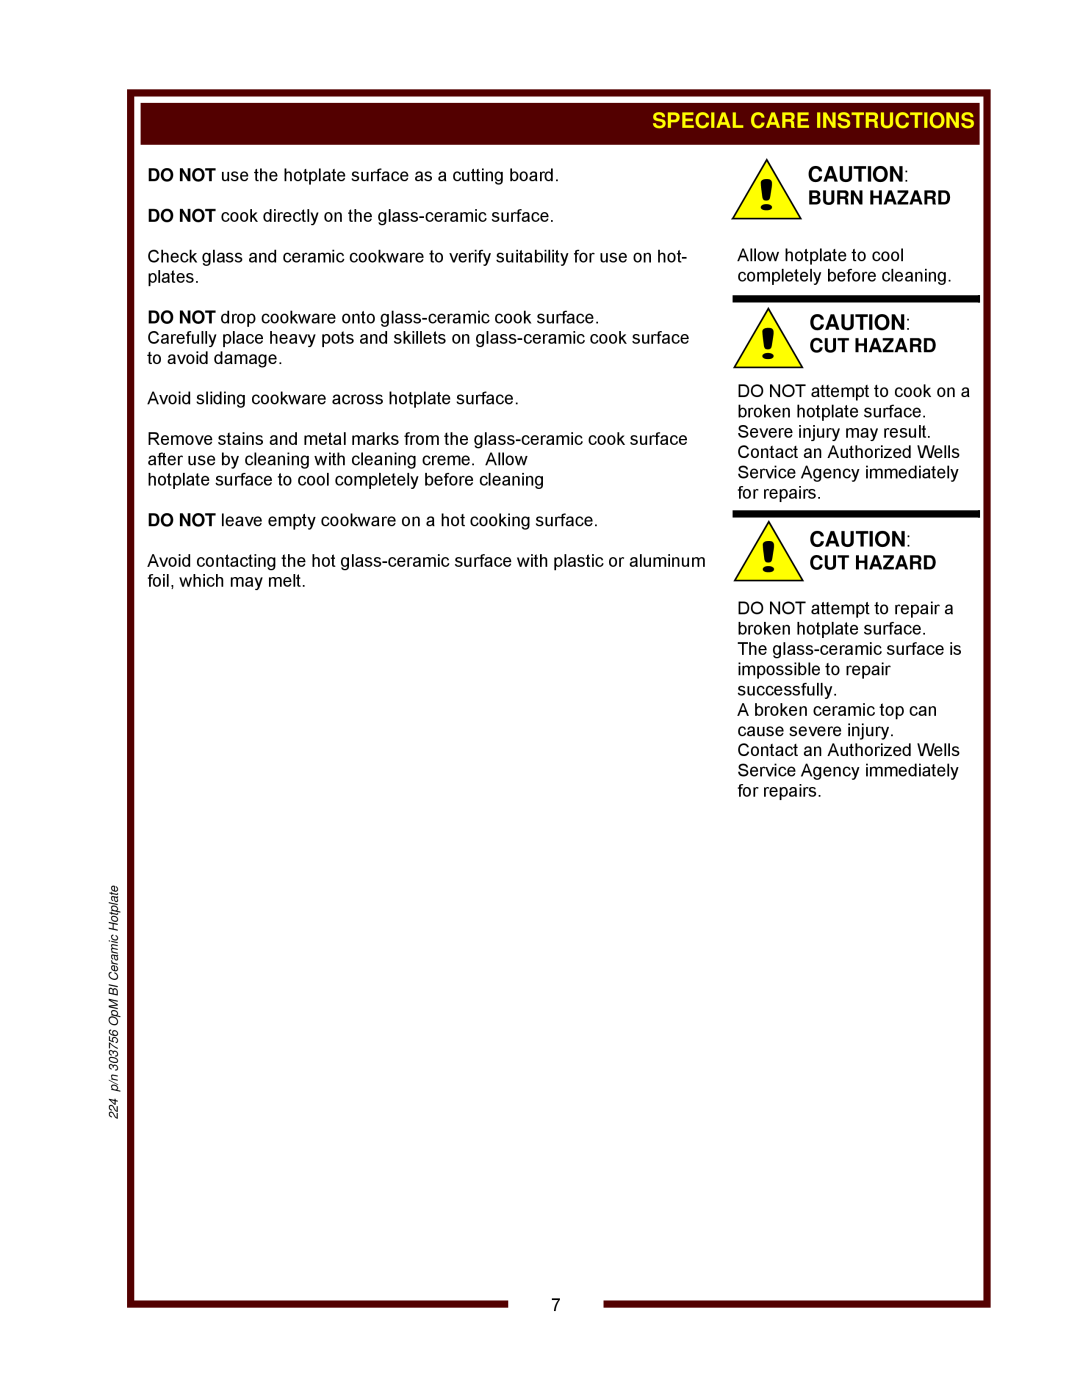 Wells HC-1006 operation manual Special Care Instructions, Burn Hazard, Cut Hazard 